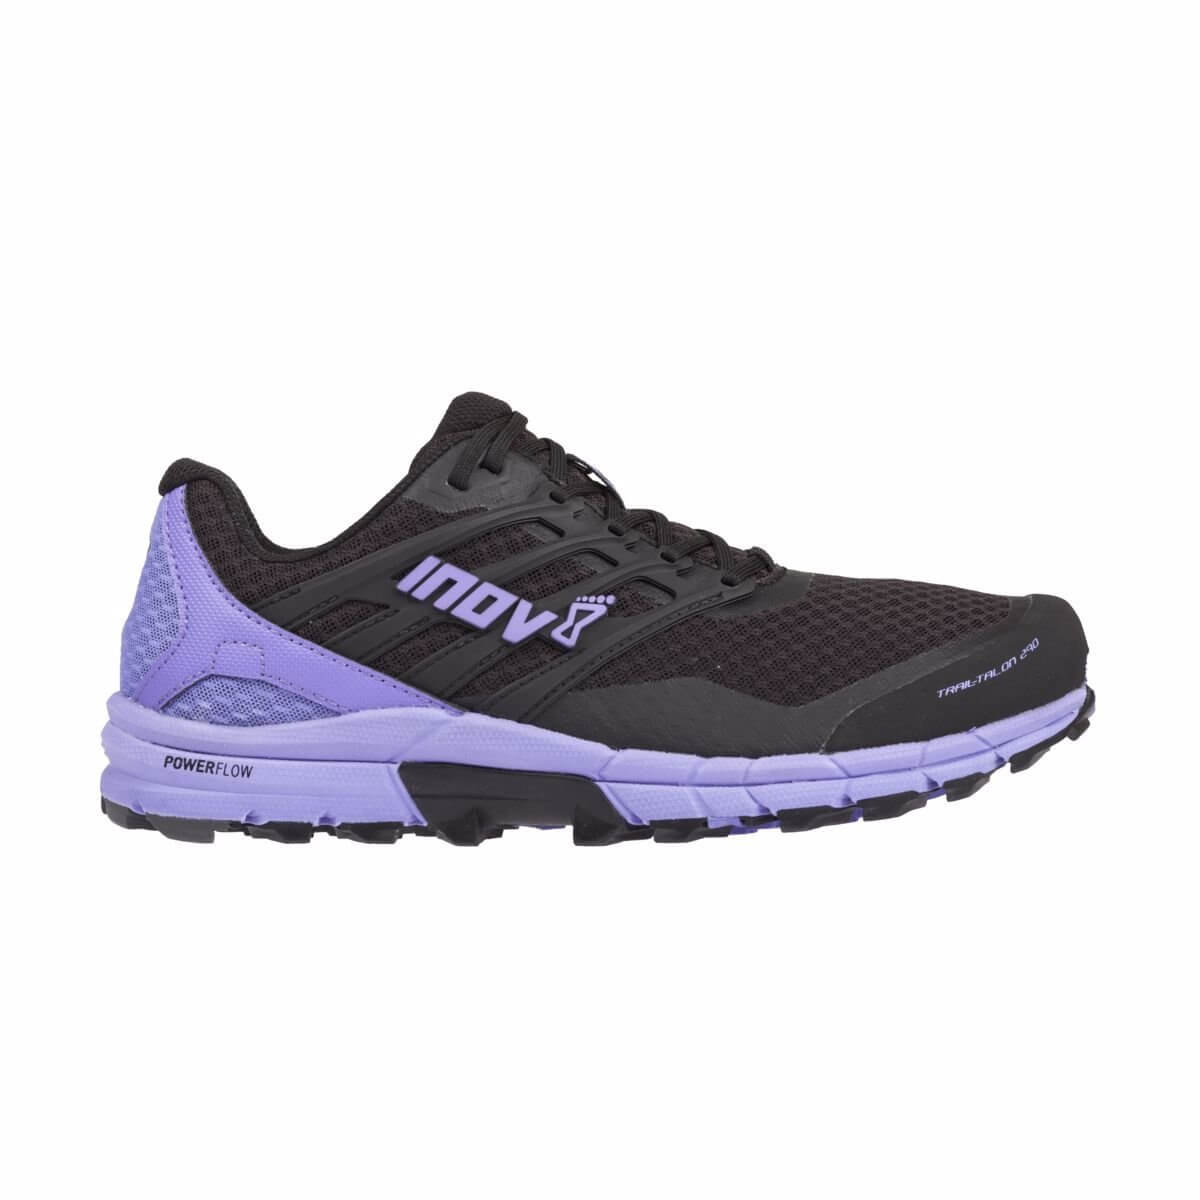 Běžecká obuv Inov-8 TRAIL TALON 290 (S) black/purple černá s fialovou